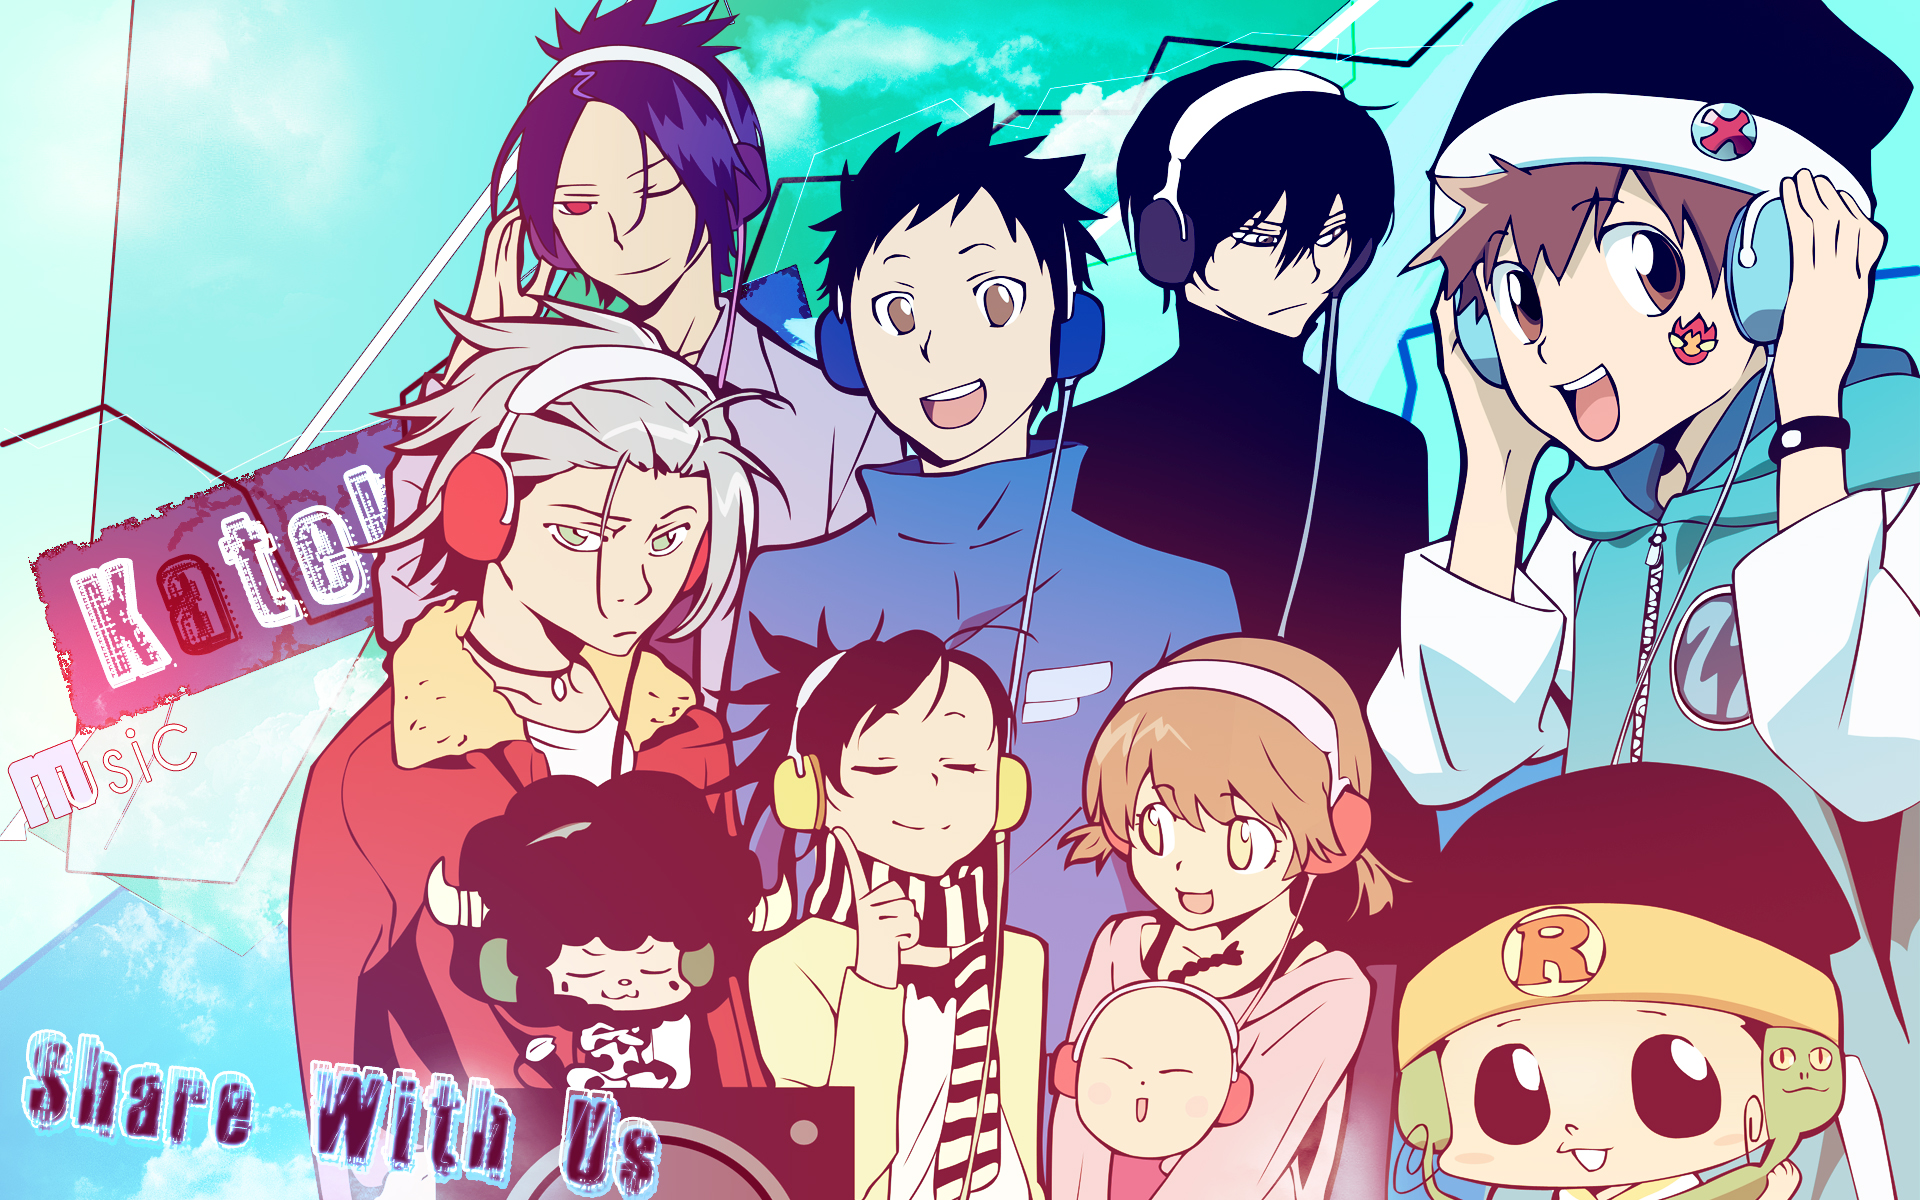 Anime desktop wallpaper featuring characters from Katekyō Hitman Reborn!